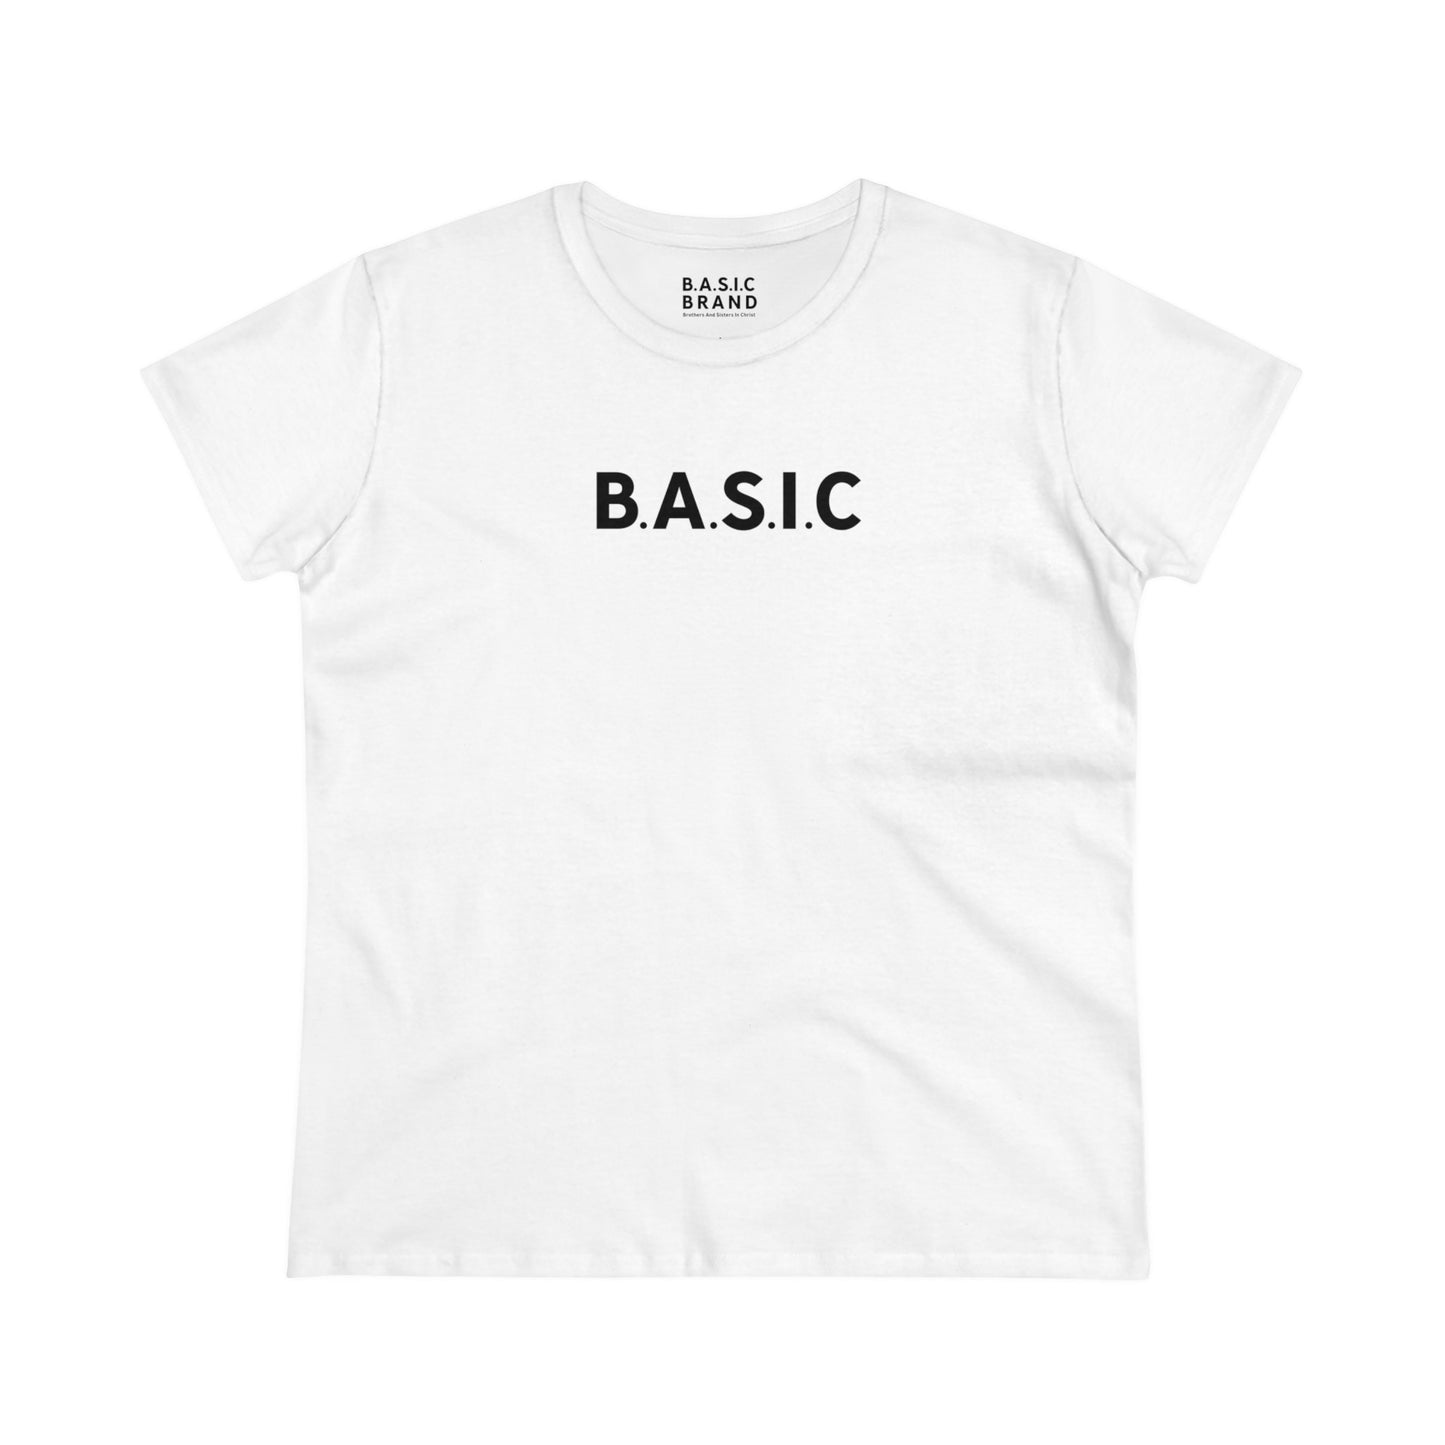 Women's Fit B.A.S.I.C "Medium Sized Logo" Tee Shirt